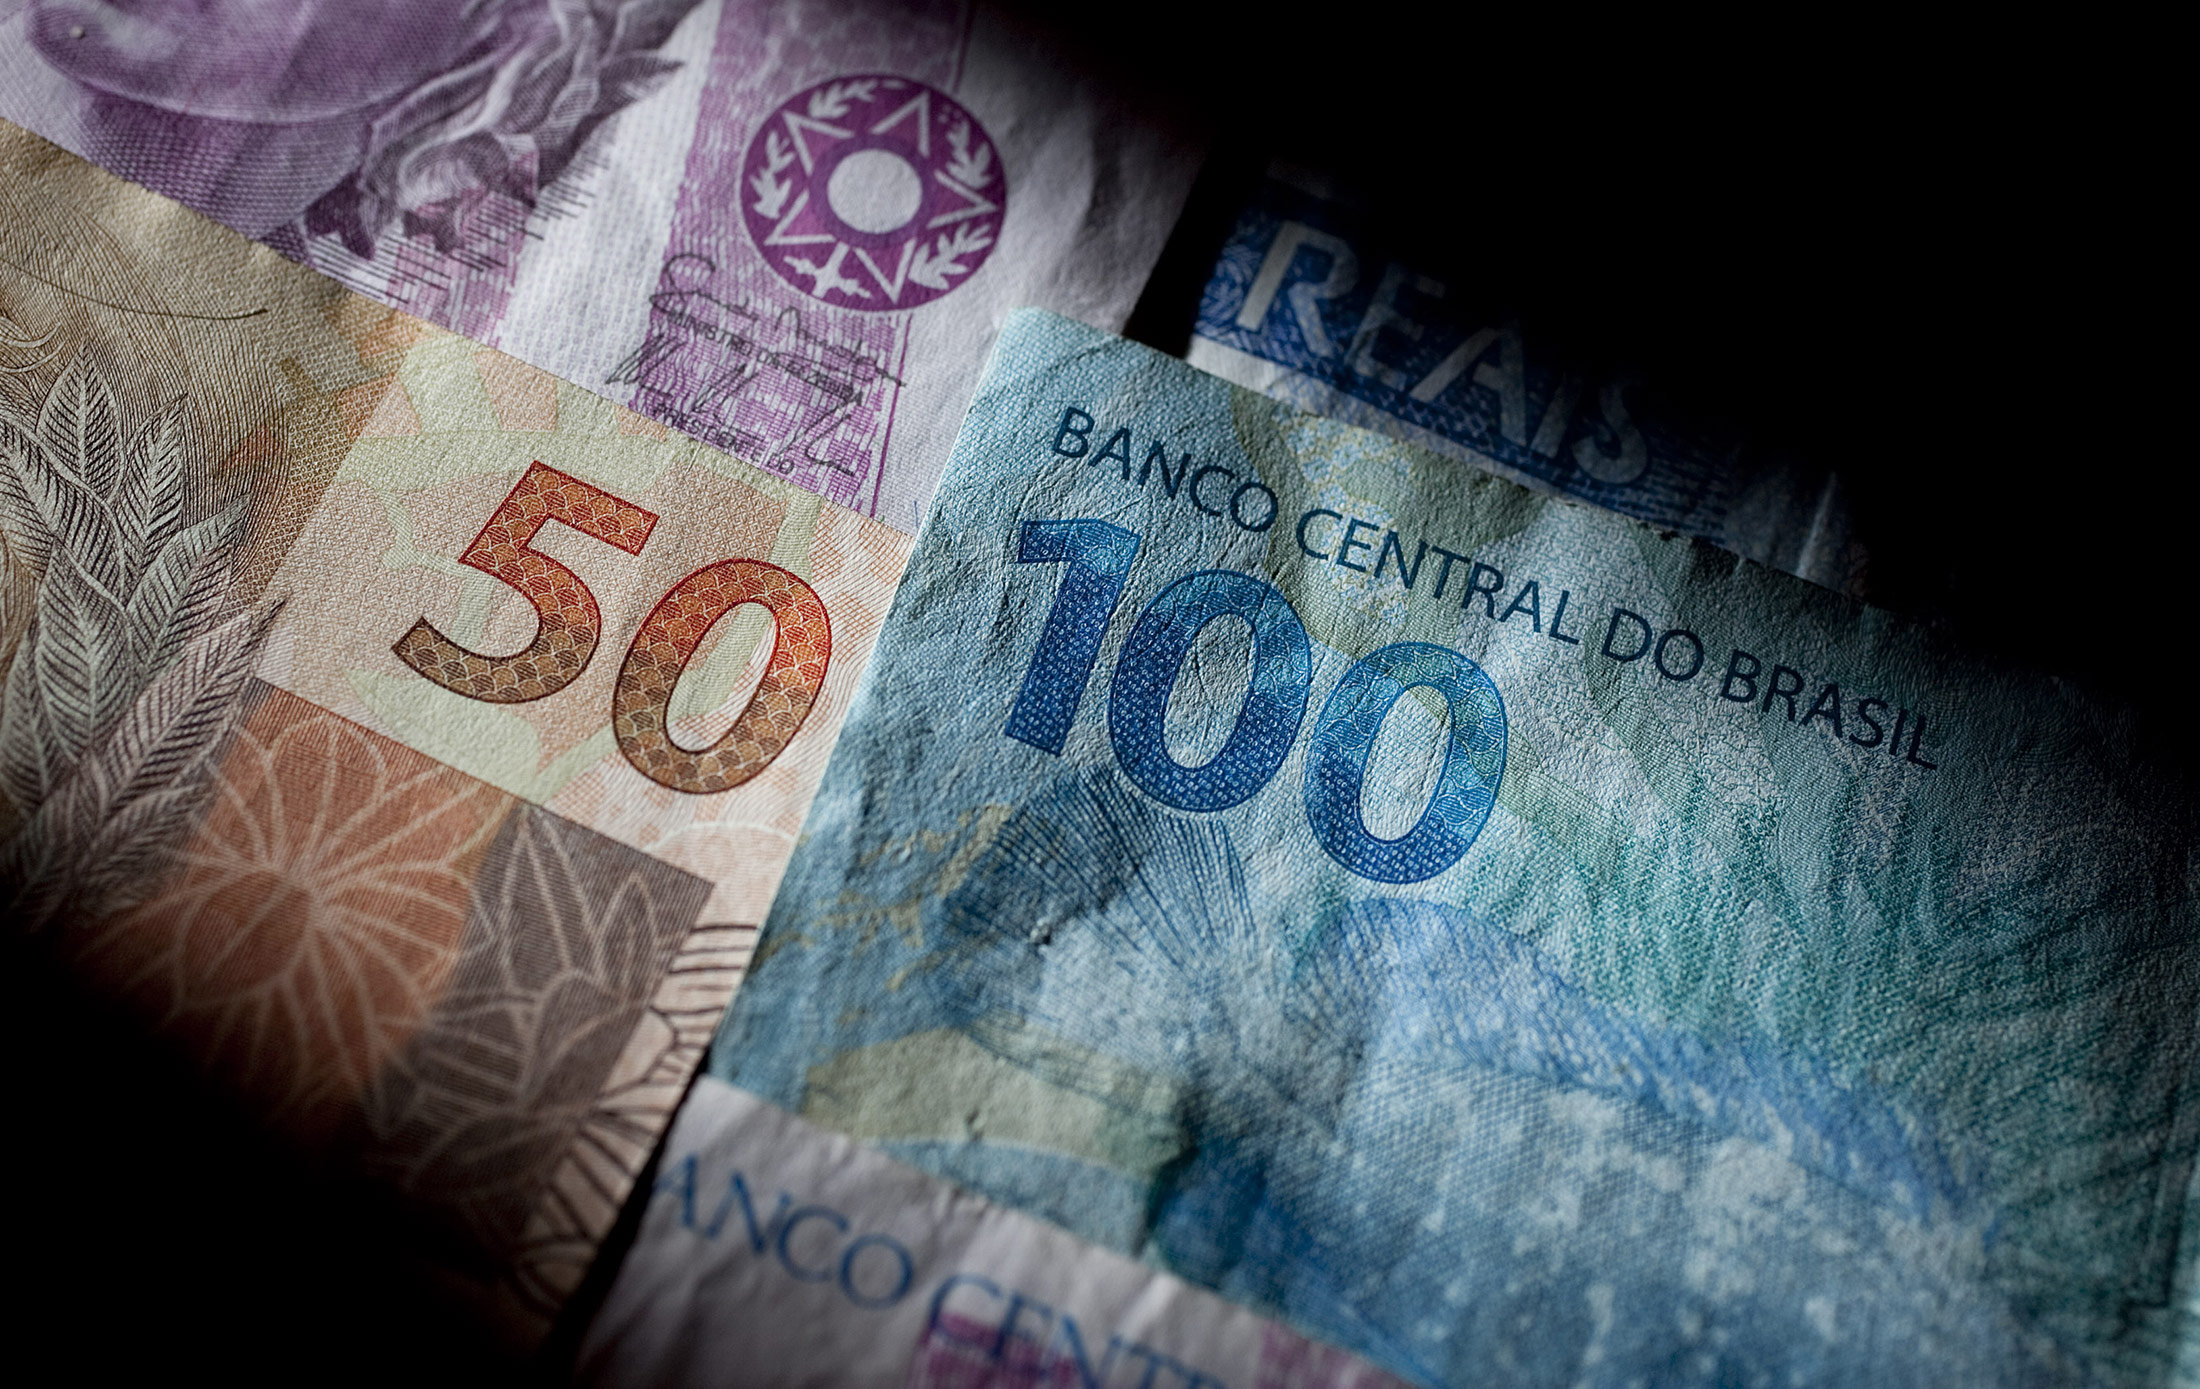 Brazil $50 REAIS Banco Central Do Brasil Bank Note Paper